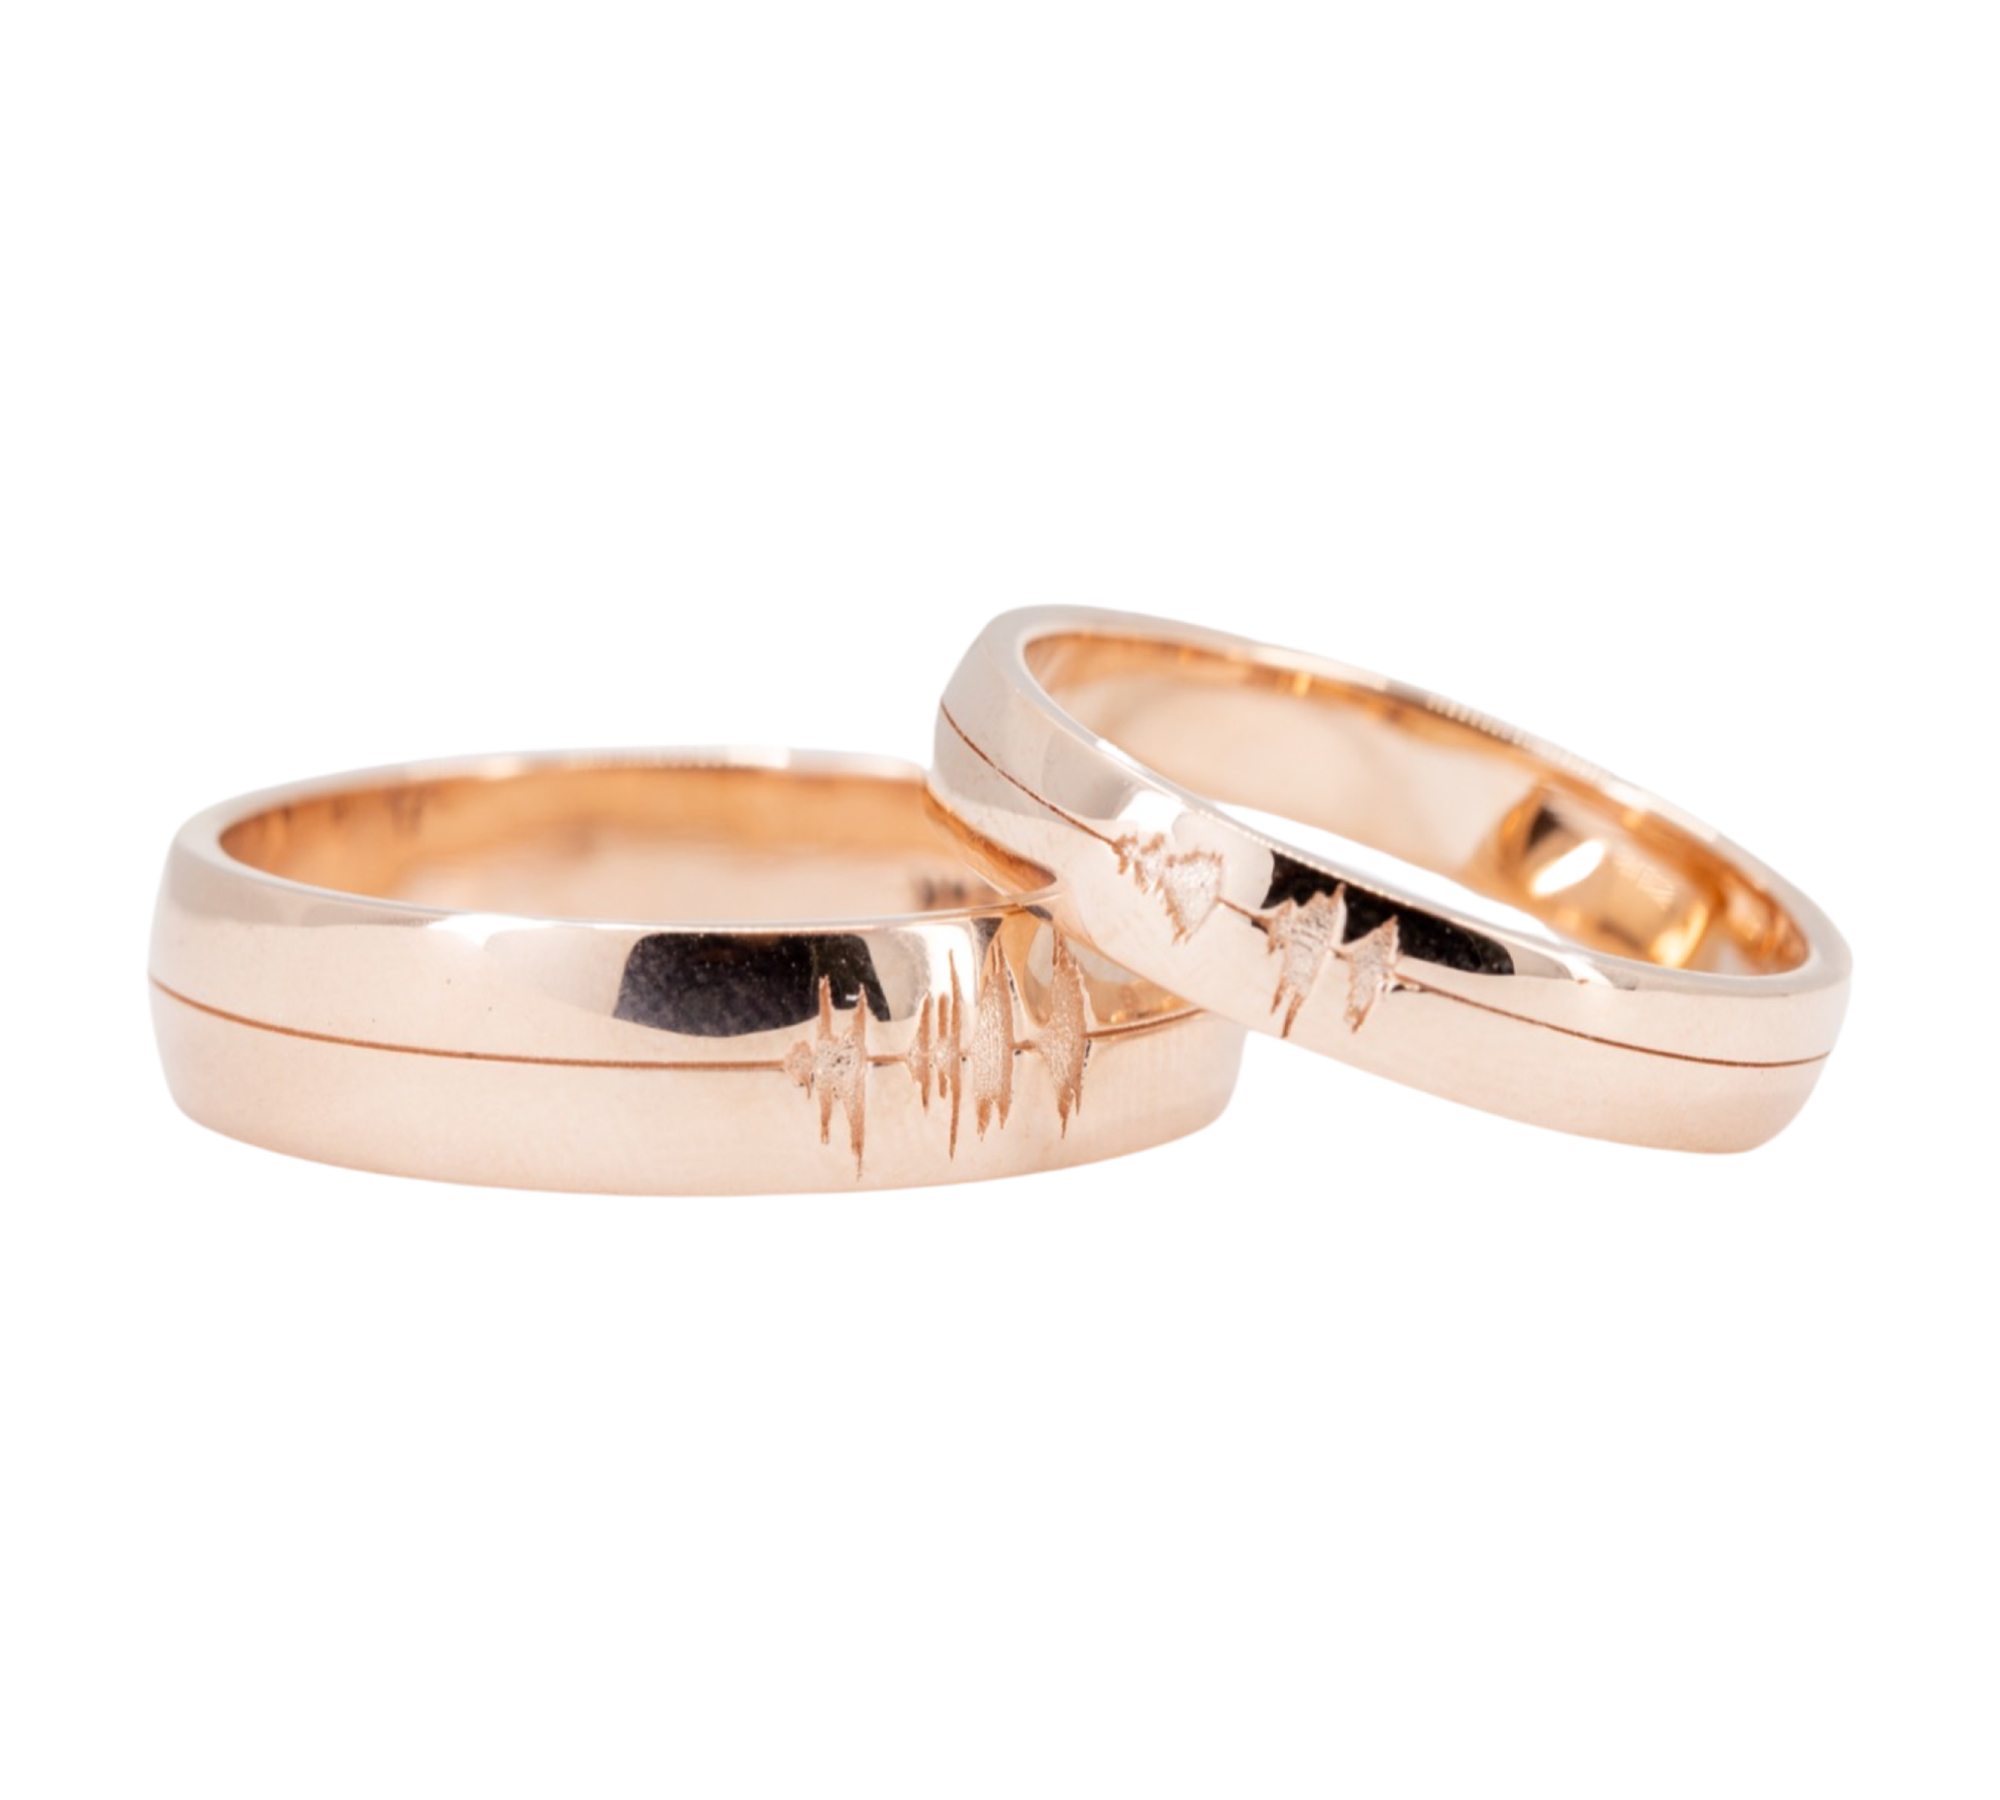 Buy Gold-Toned & White Rings for Women by University Trendz Online |  Ajio.com